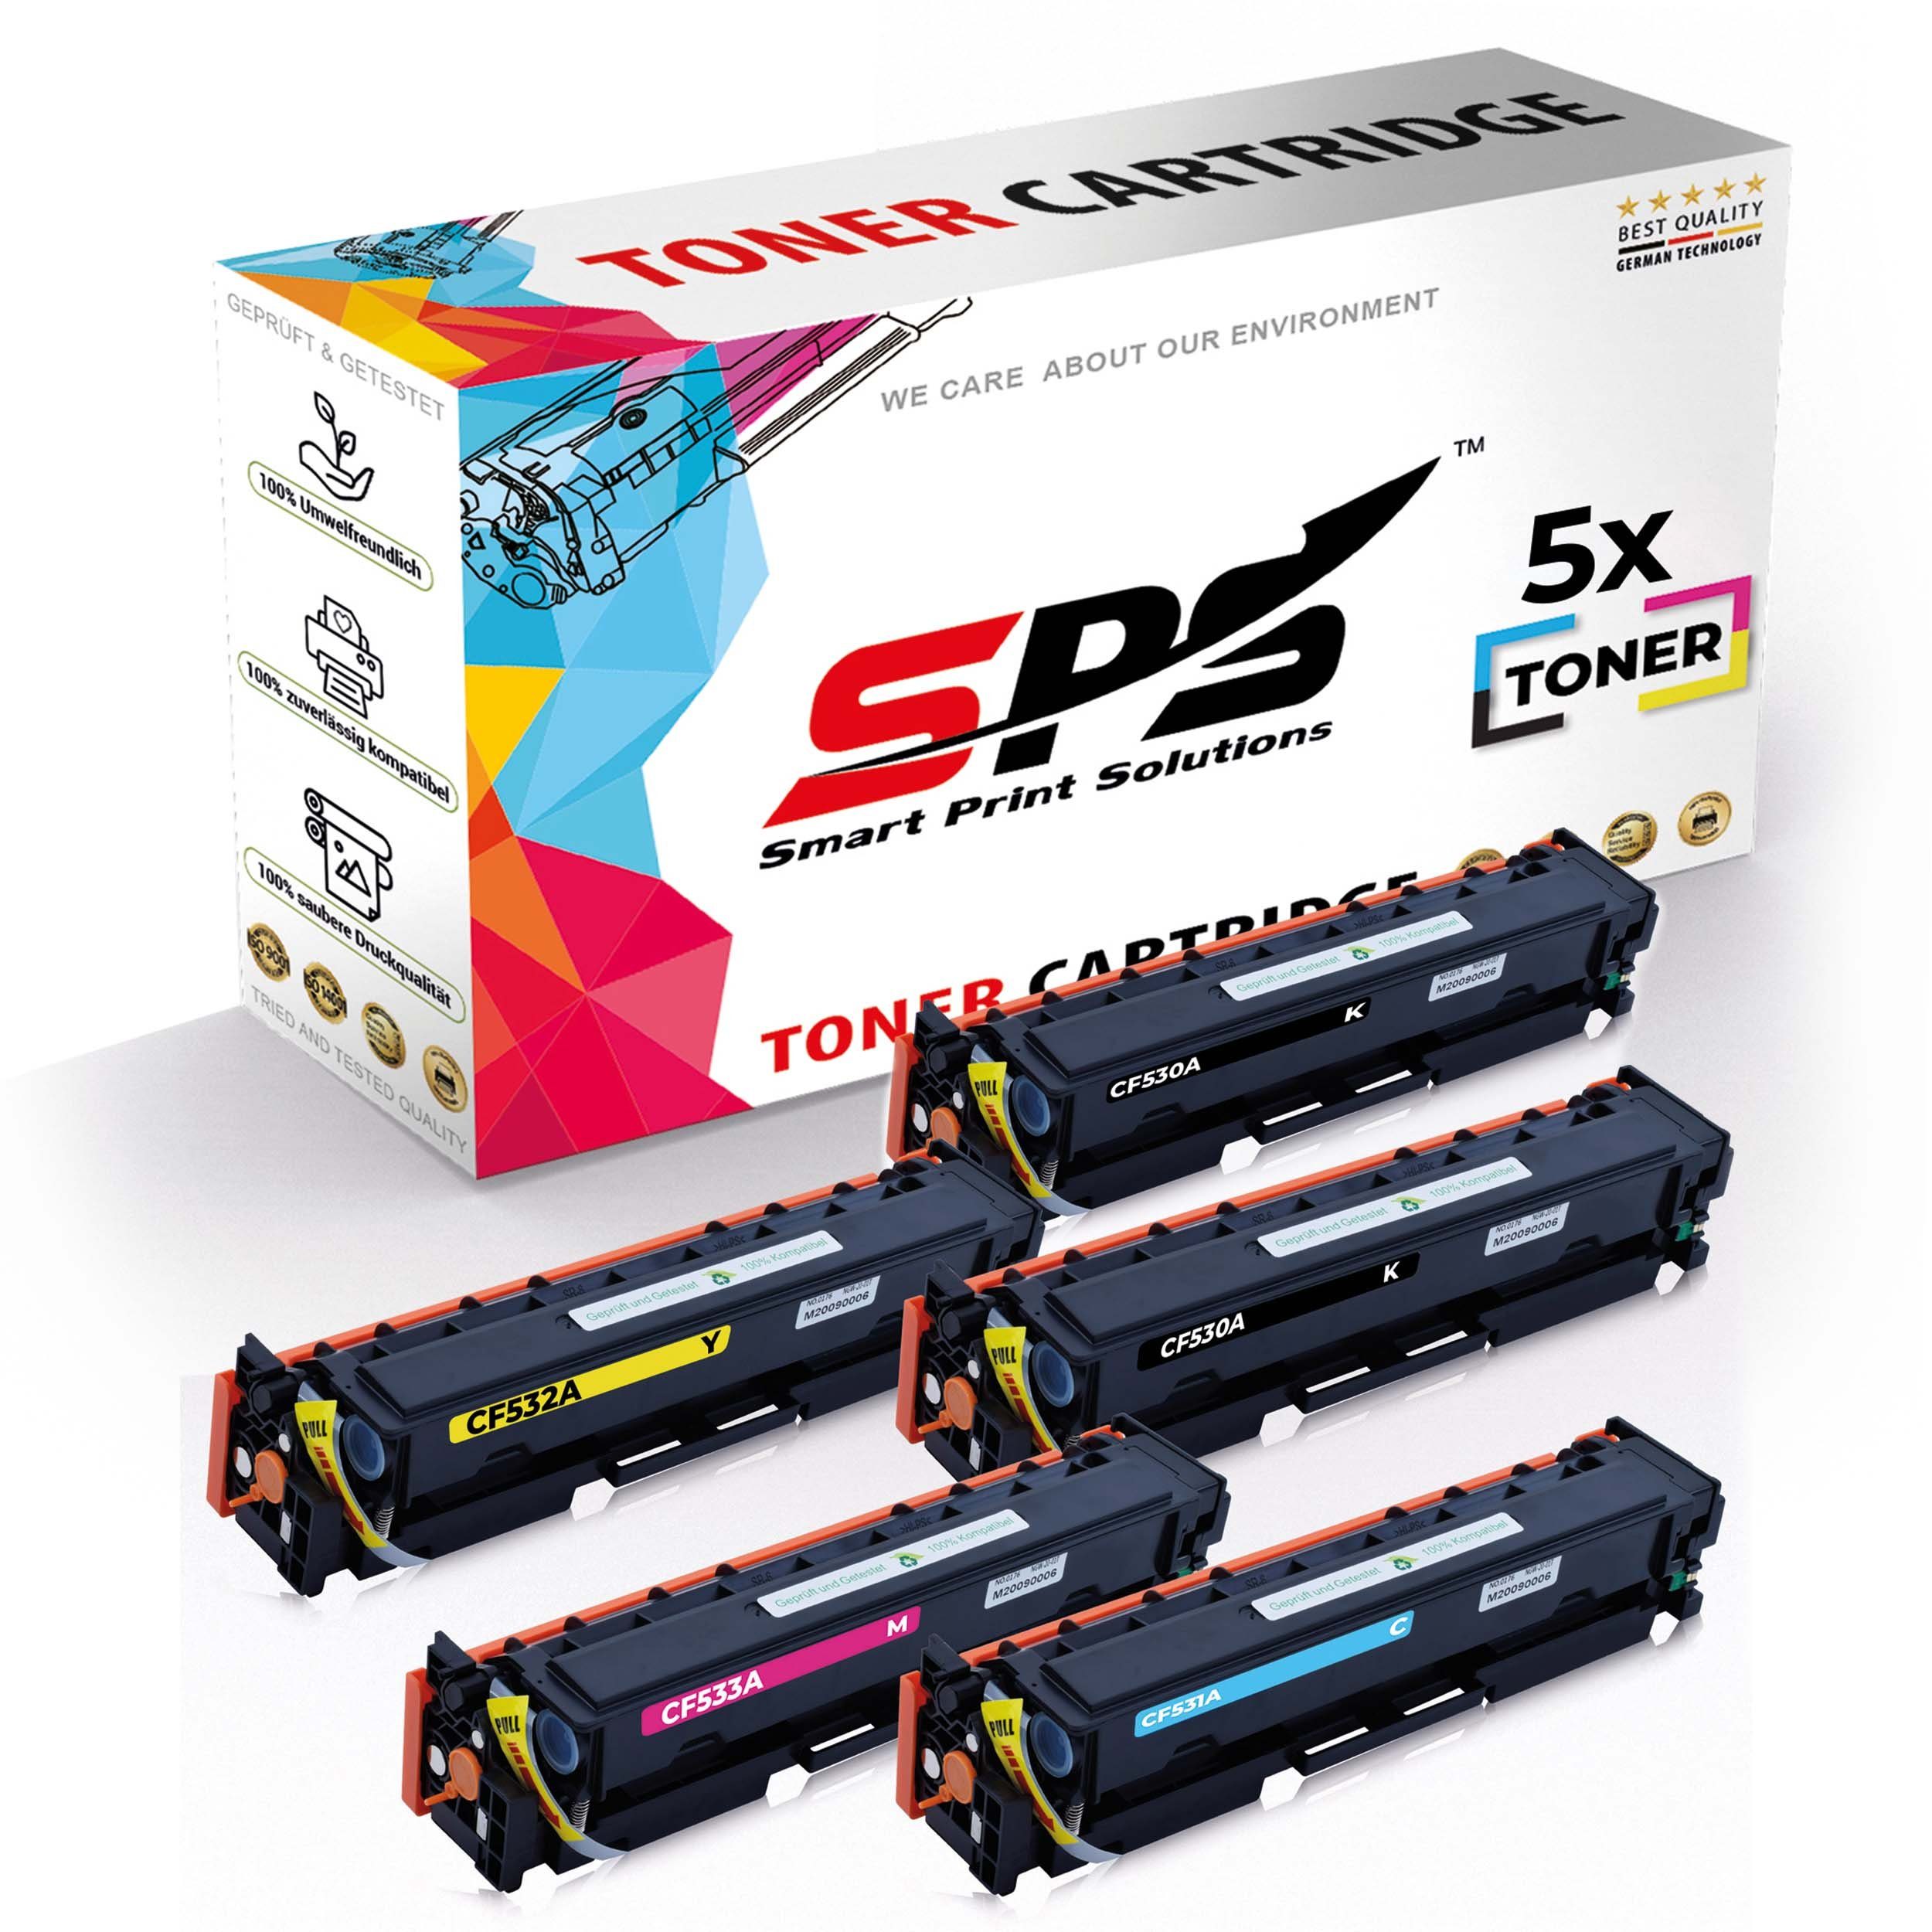 SPS Tonerkartusche 5x Multipack Set Kompatibel für HP Color LaserJet, (5er Pack, 5x Toner) | Tonerpatronen